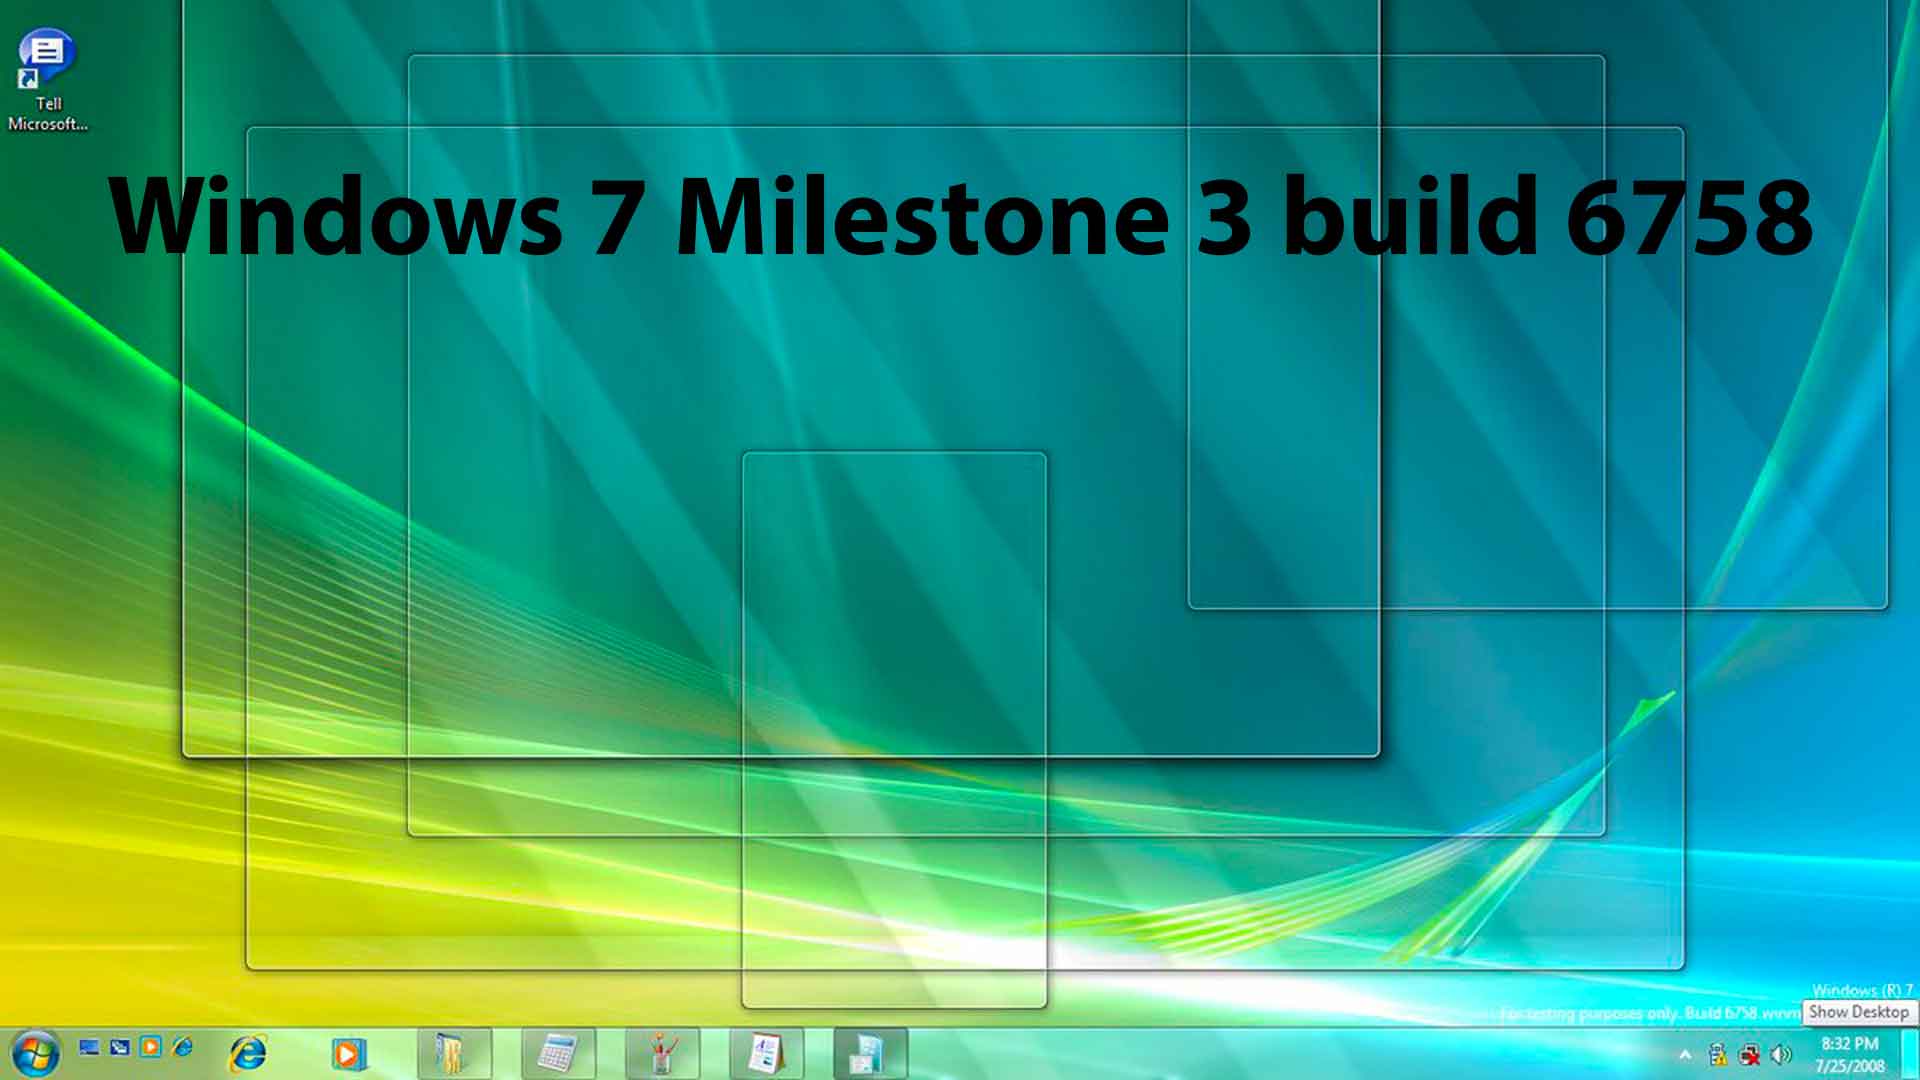 Windows 7 Milestone 3 build 6758